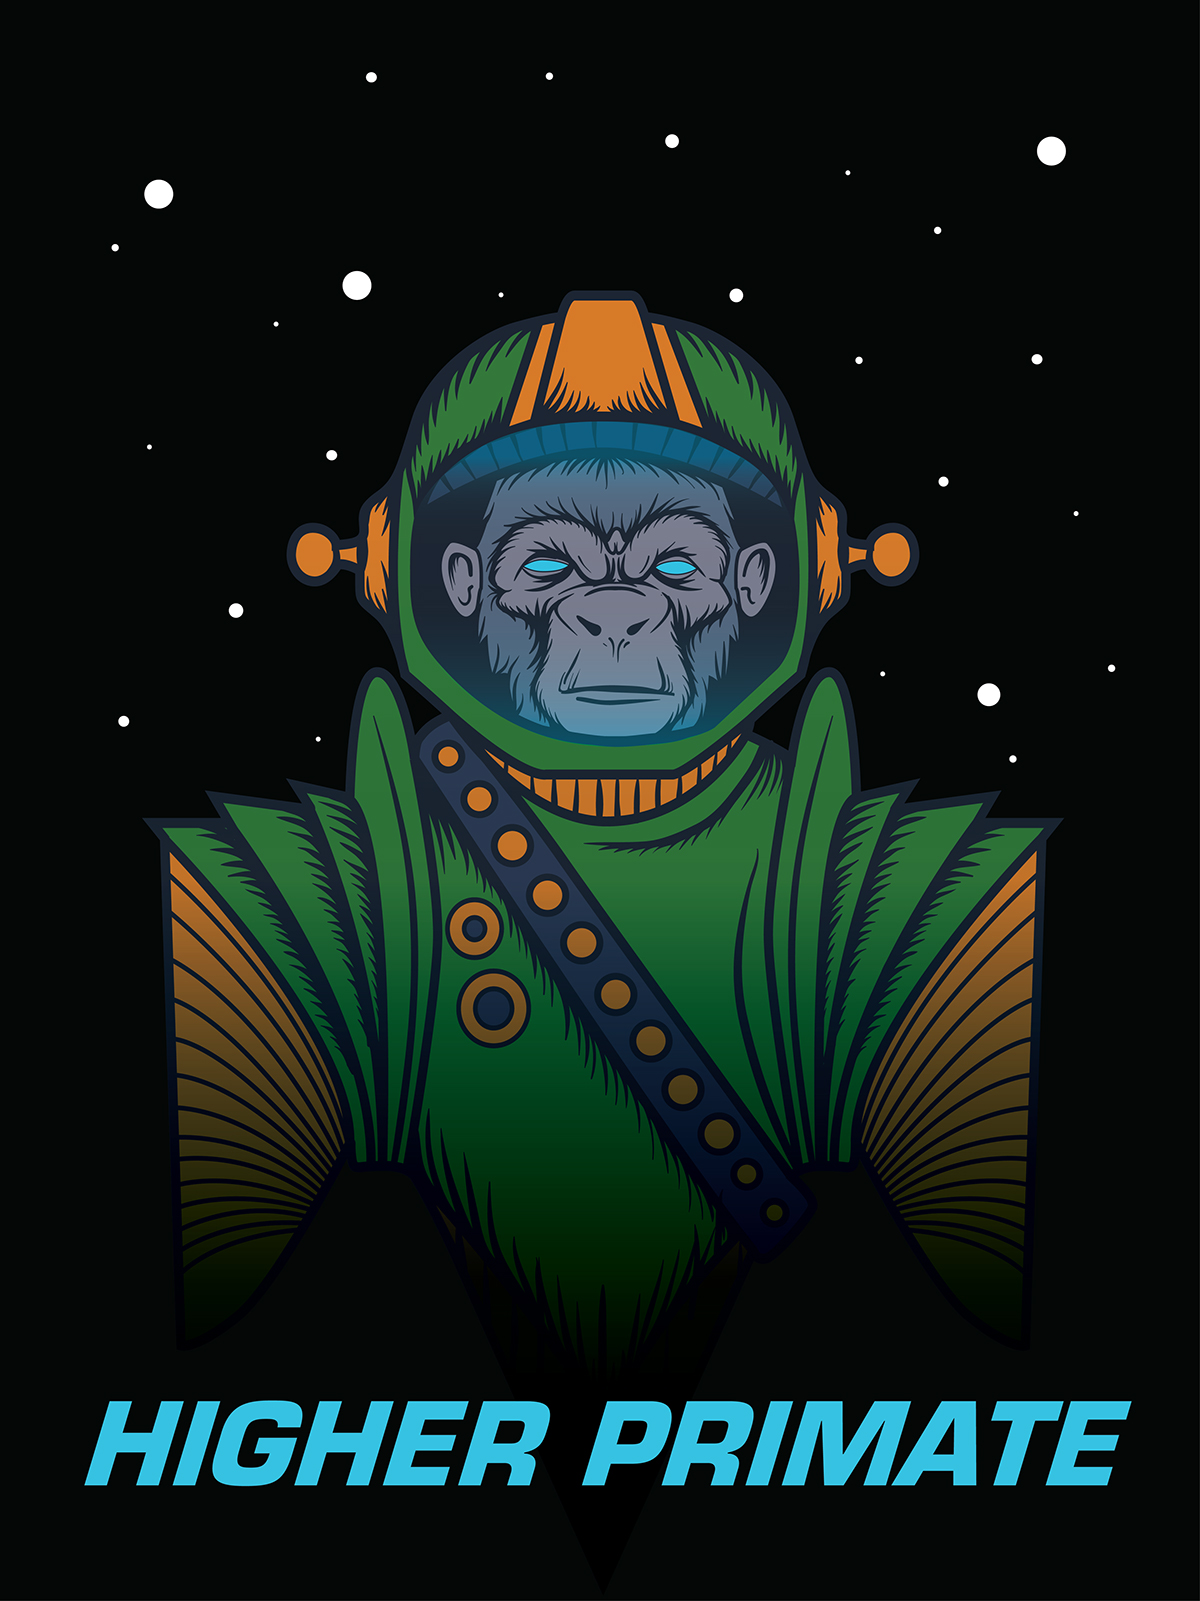 higher primate ape apparel Logo Design t-shirt package design  Hag Tag